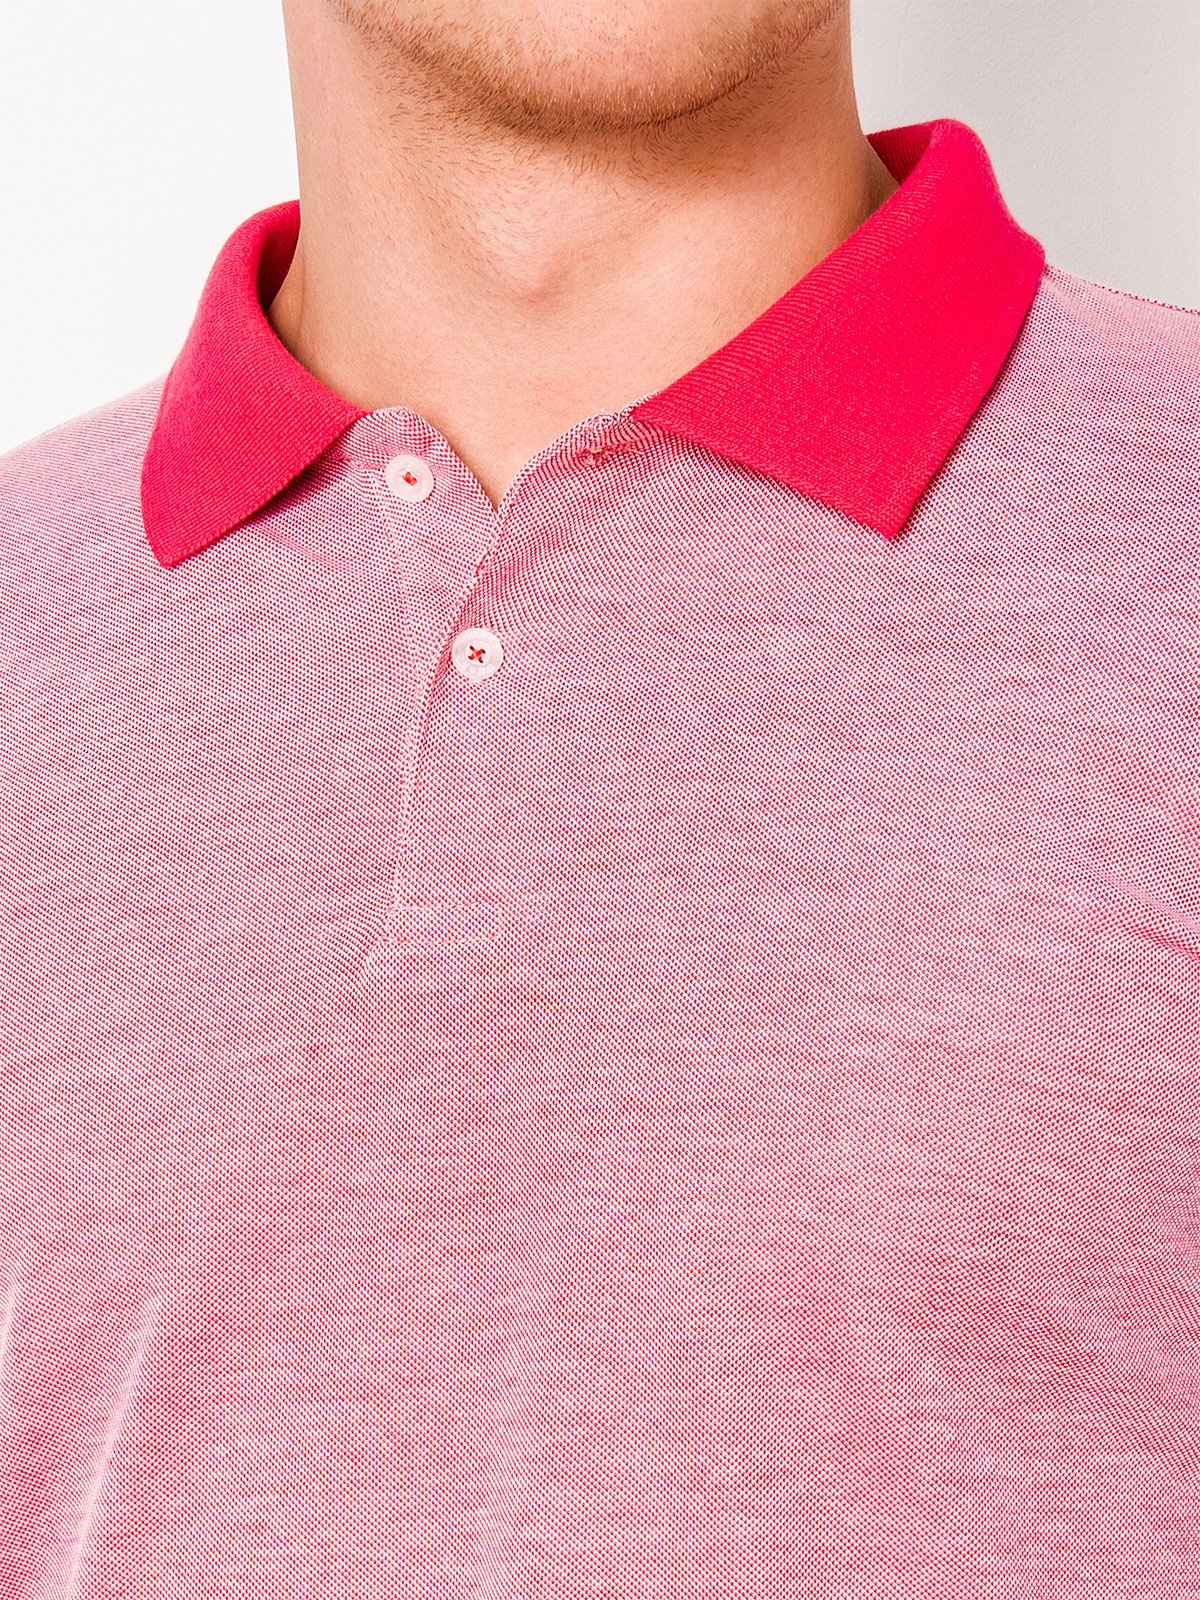 Men's plain polo shirt S847 - pink | MODONE wholesale - Clothing For Men